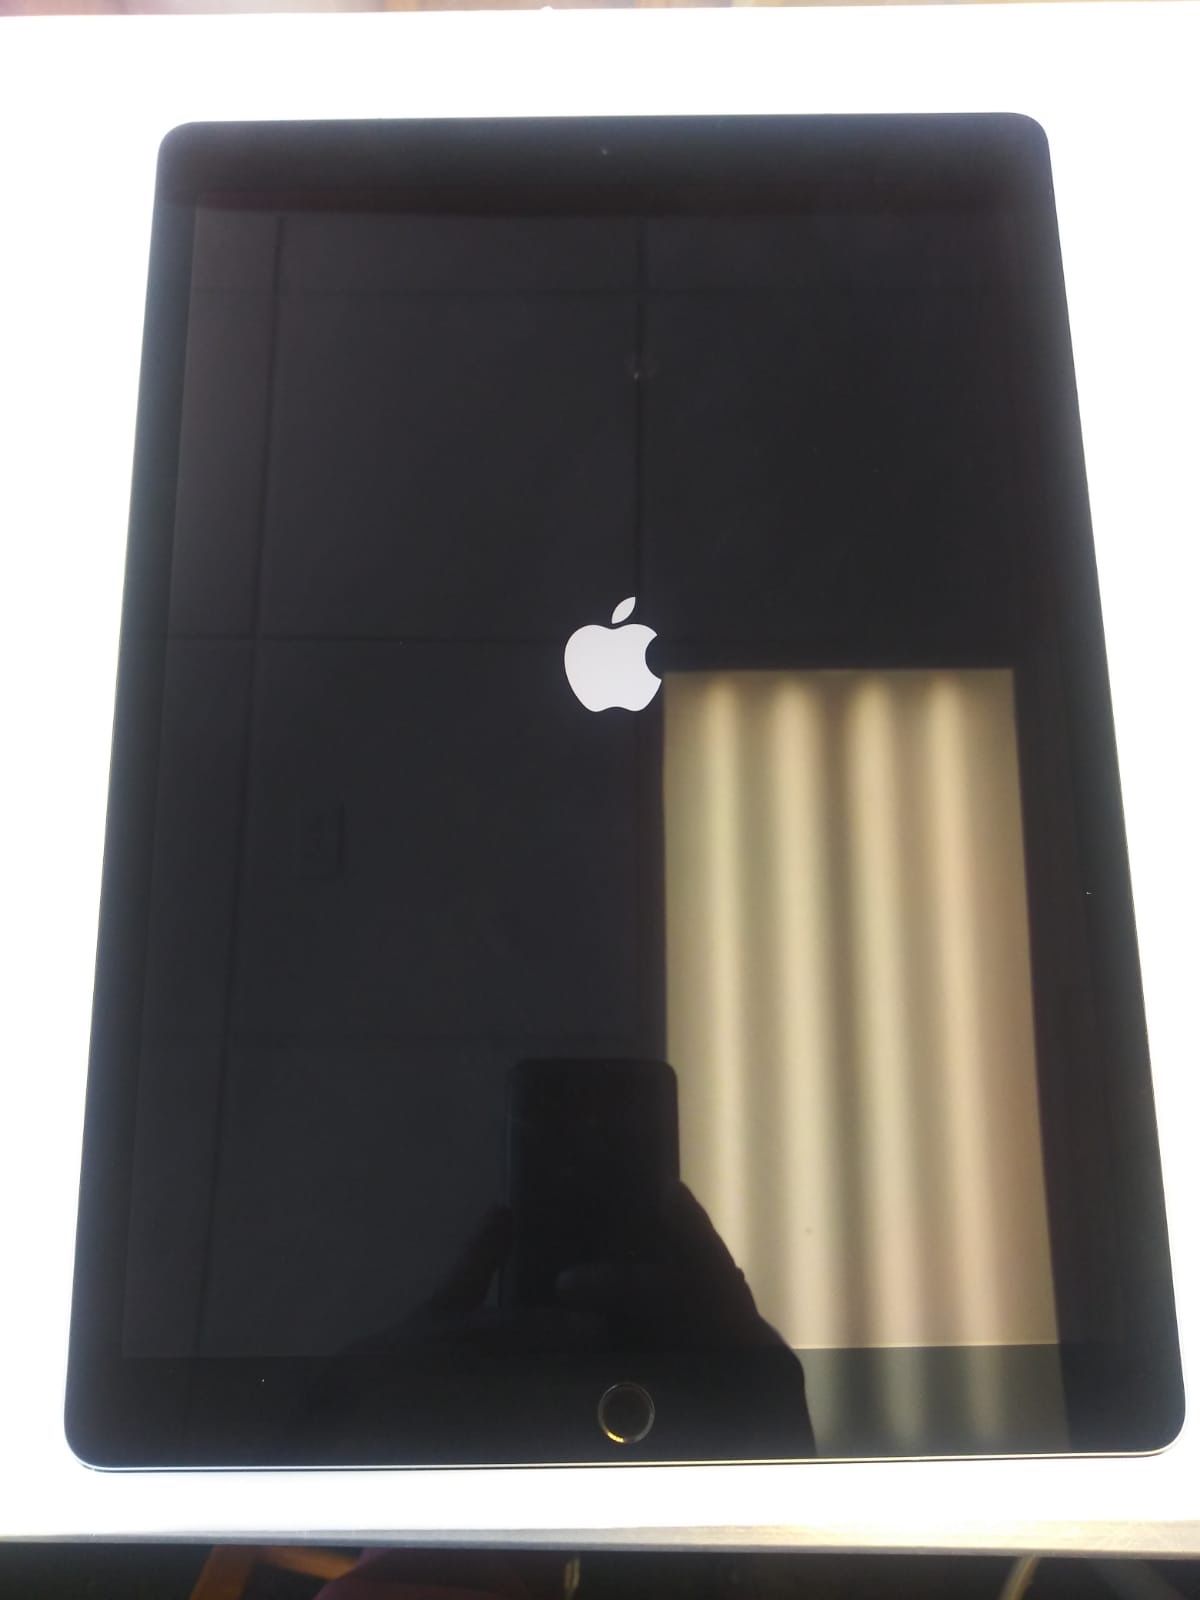 iPad Pro 12.9” 2nd generation